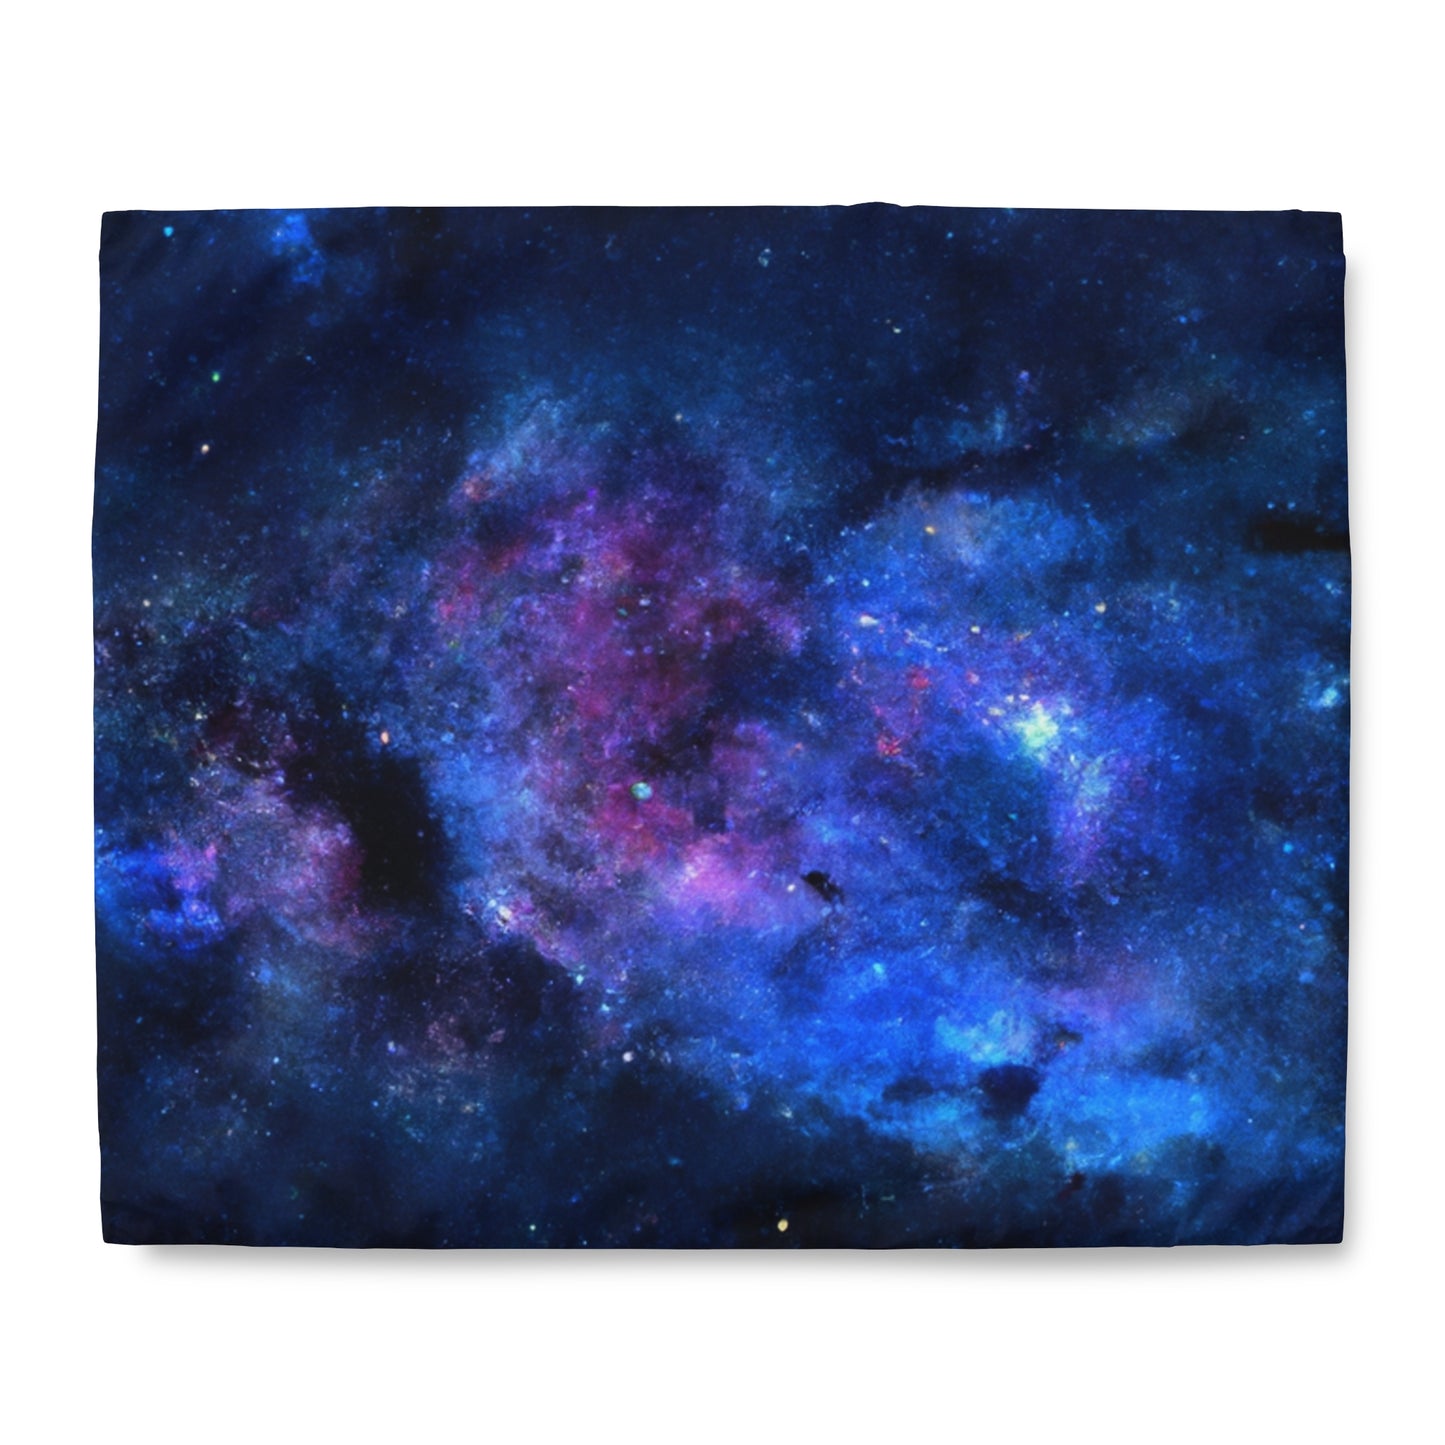 Arlowe Sparklebreath - Astronomy Duvet Bed Cover